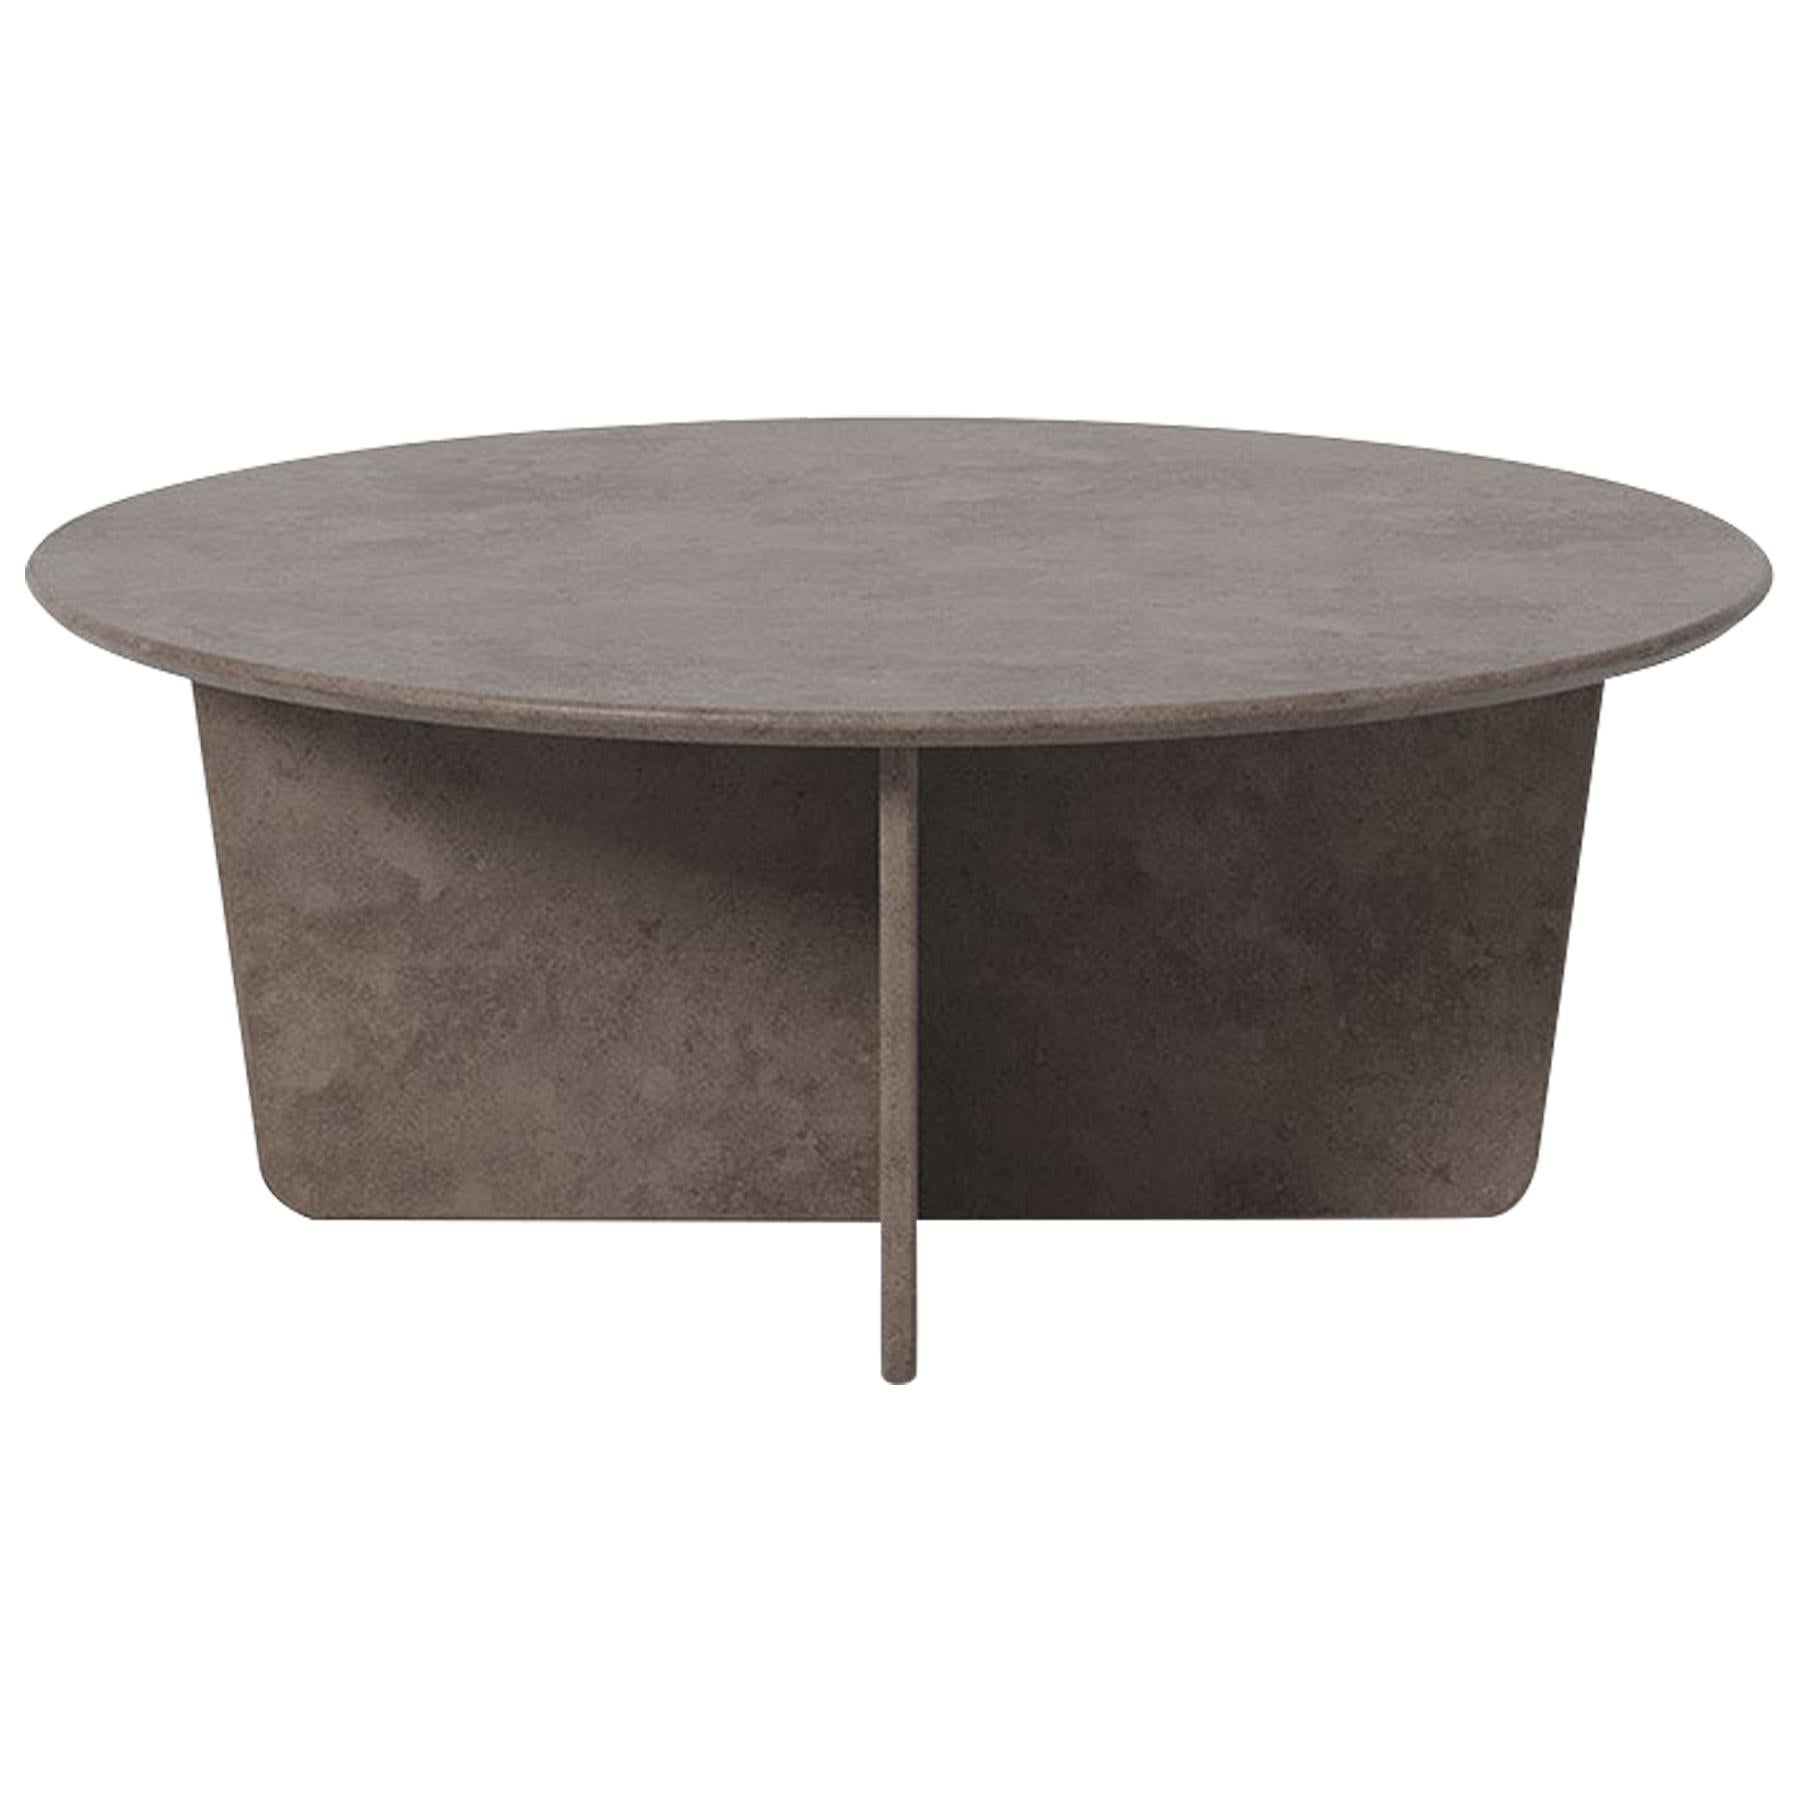 Space Copenhagen Tableau Stone Coffee Table – Round